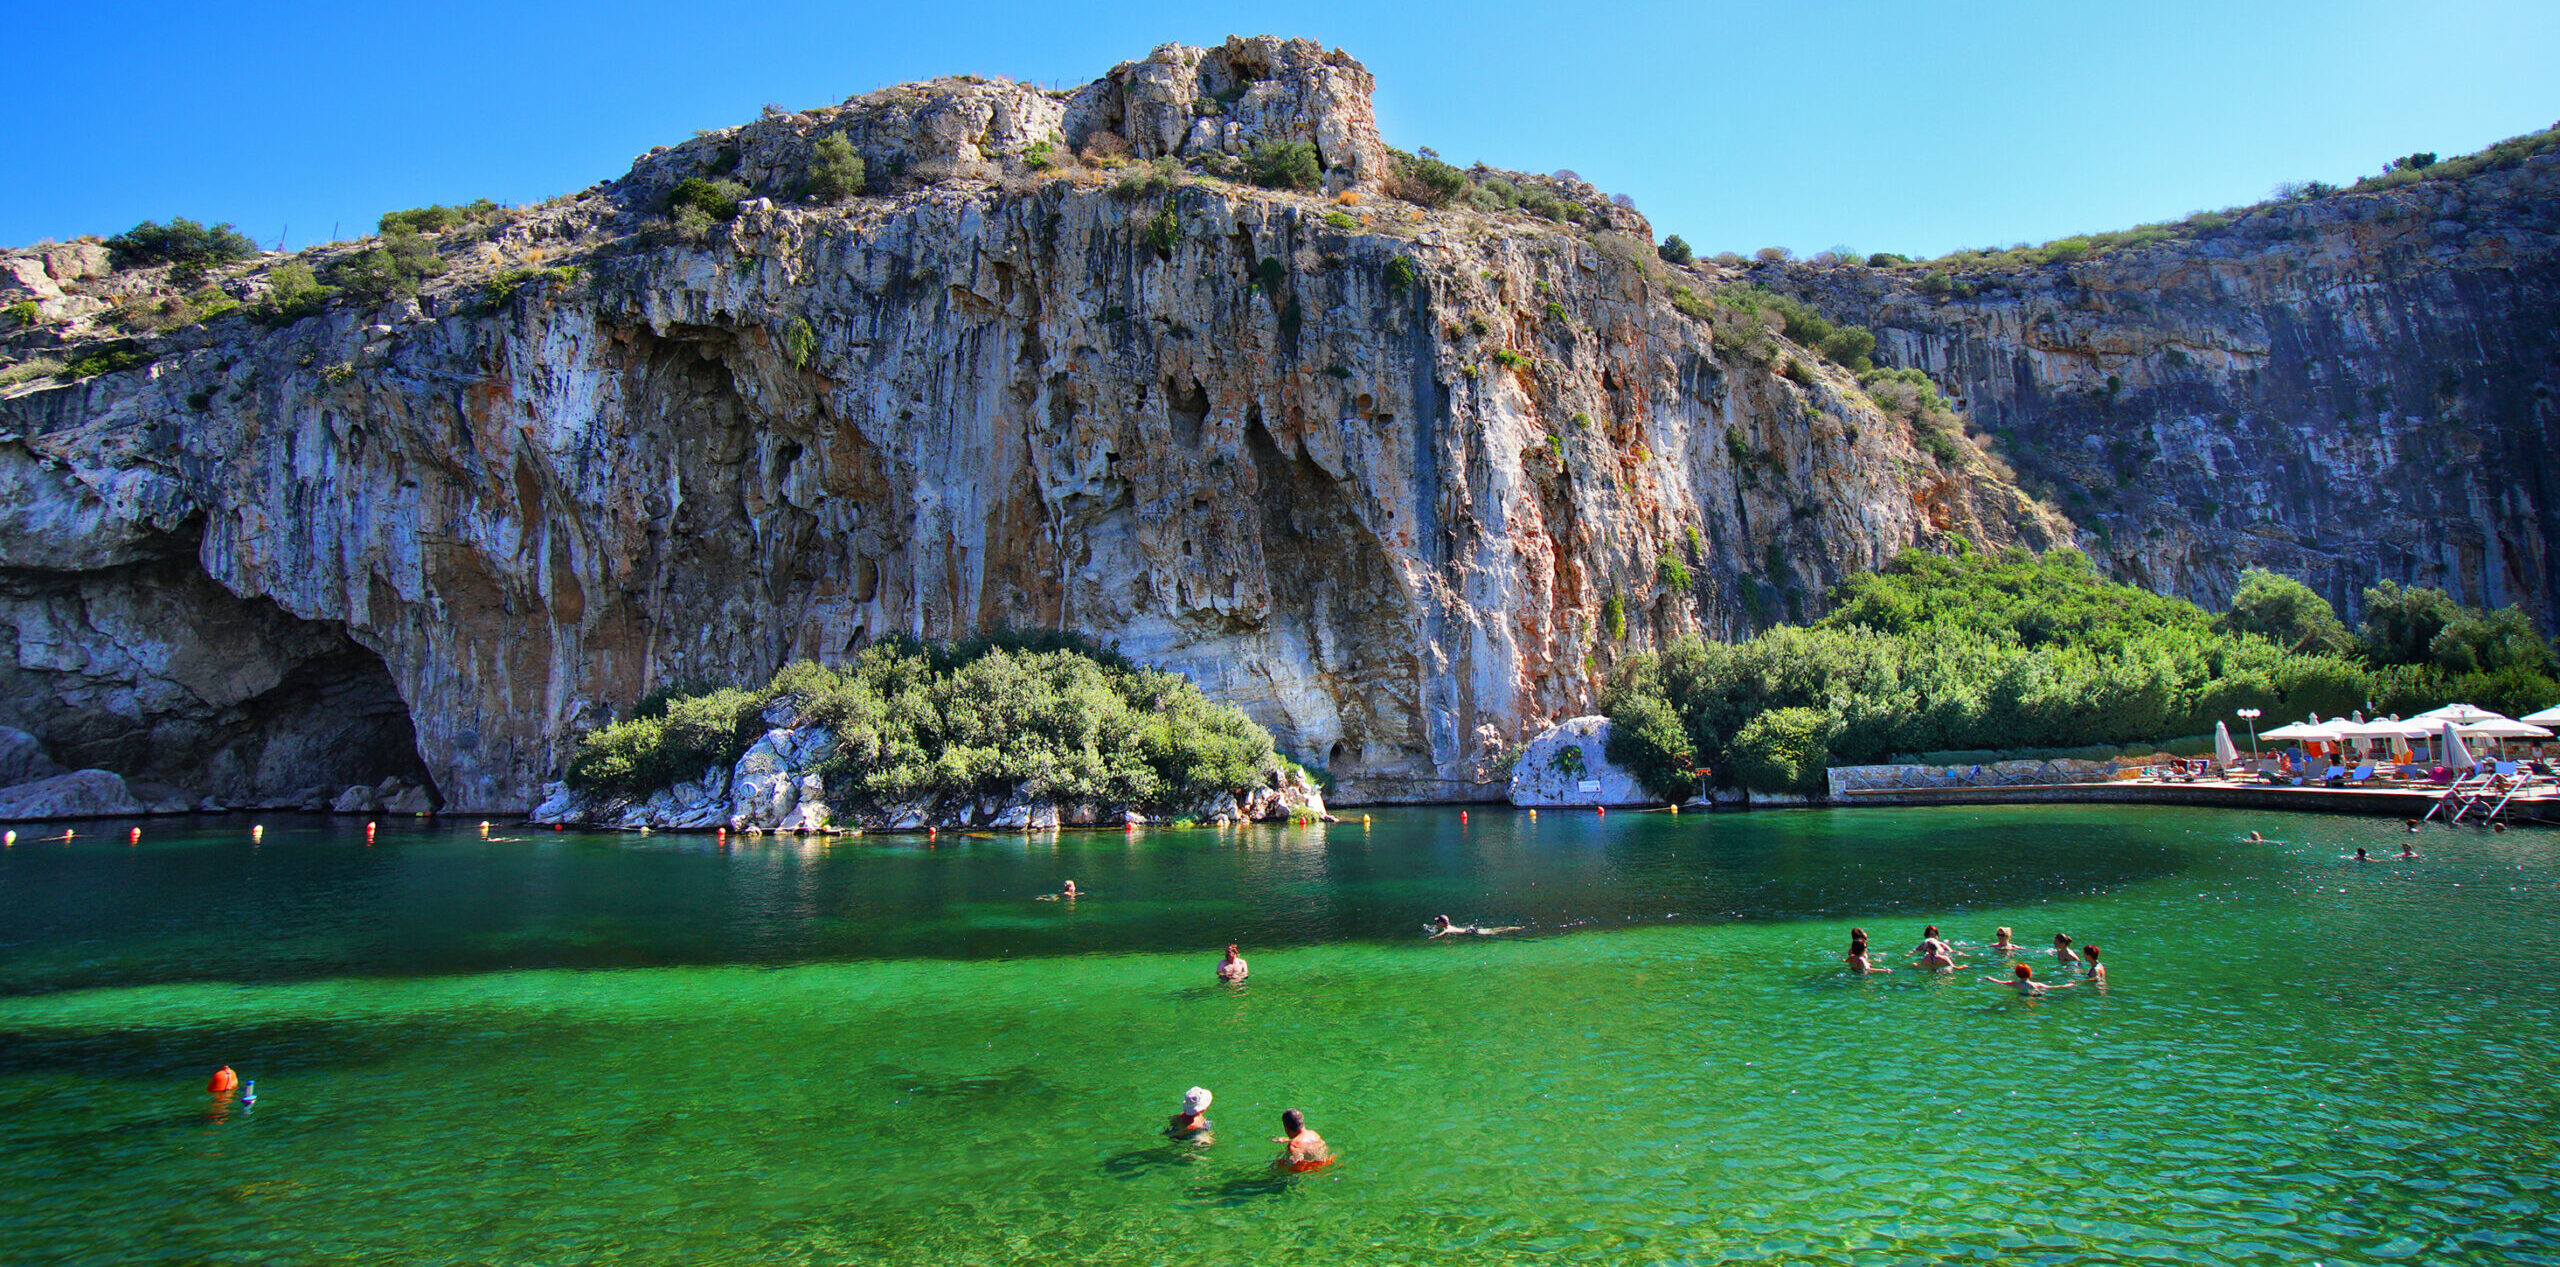 Attica: hot winter dips in Vouliagmeni lagoon